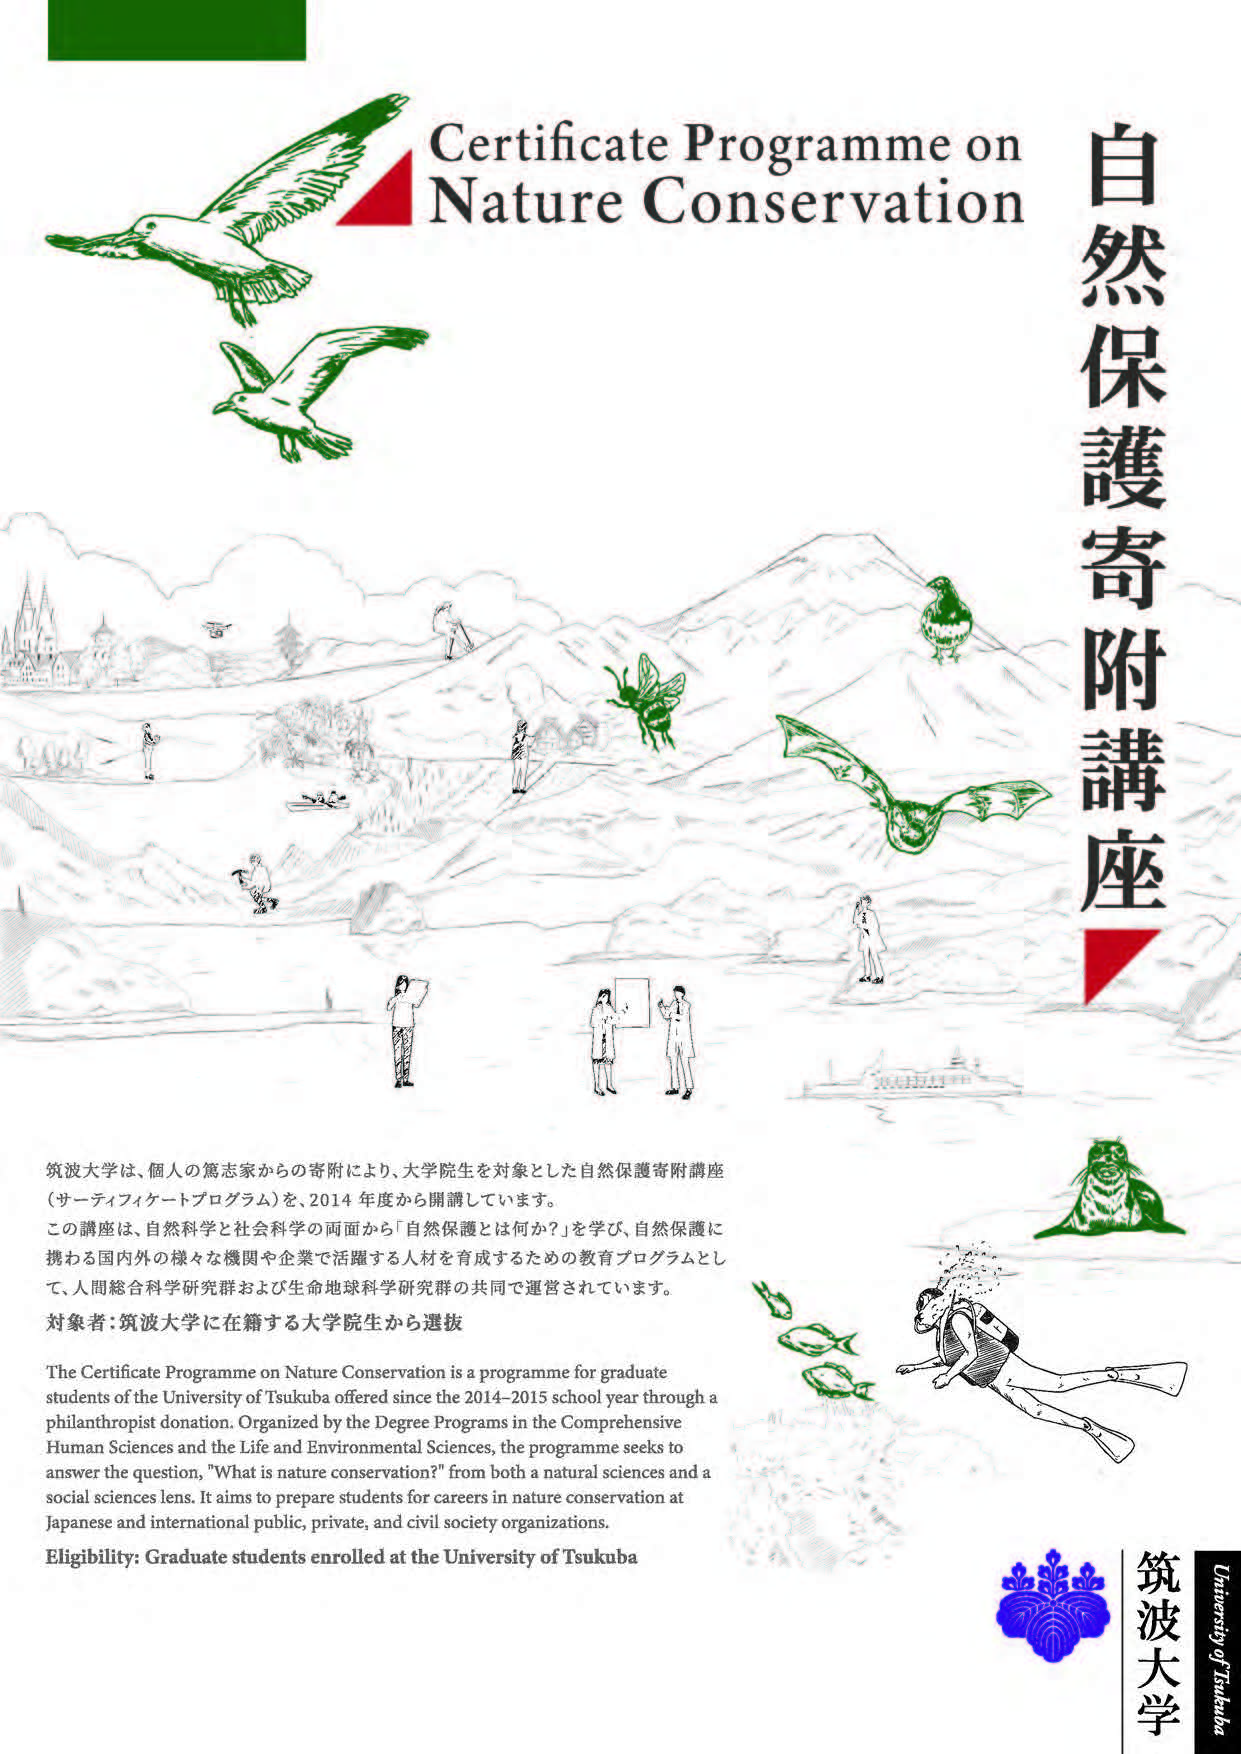 s-Pamphlet_Certificate Programme on Nature Conservation, University of Tsukuba_2020